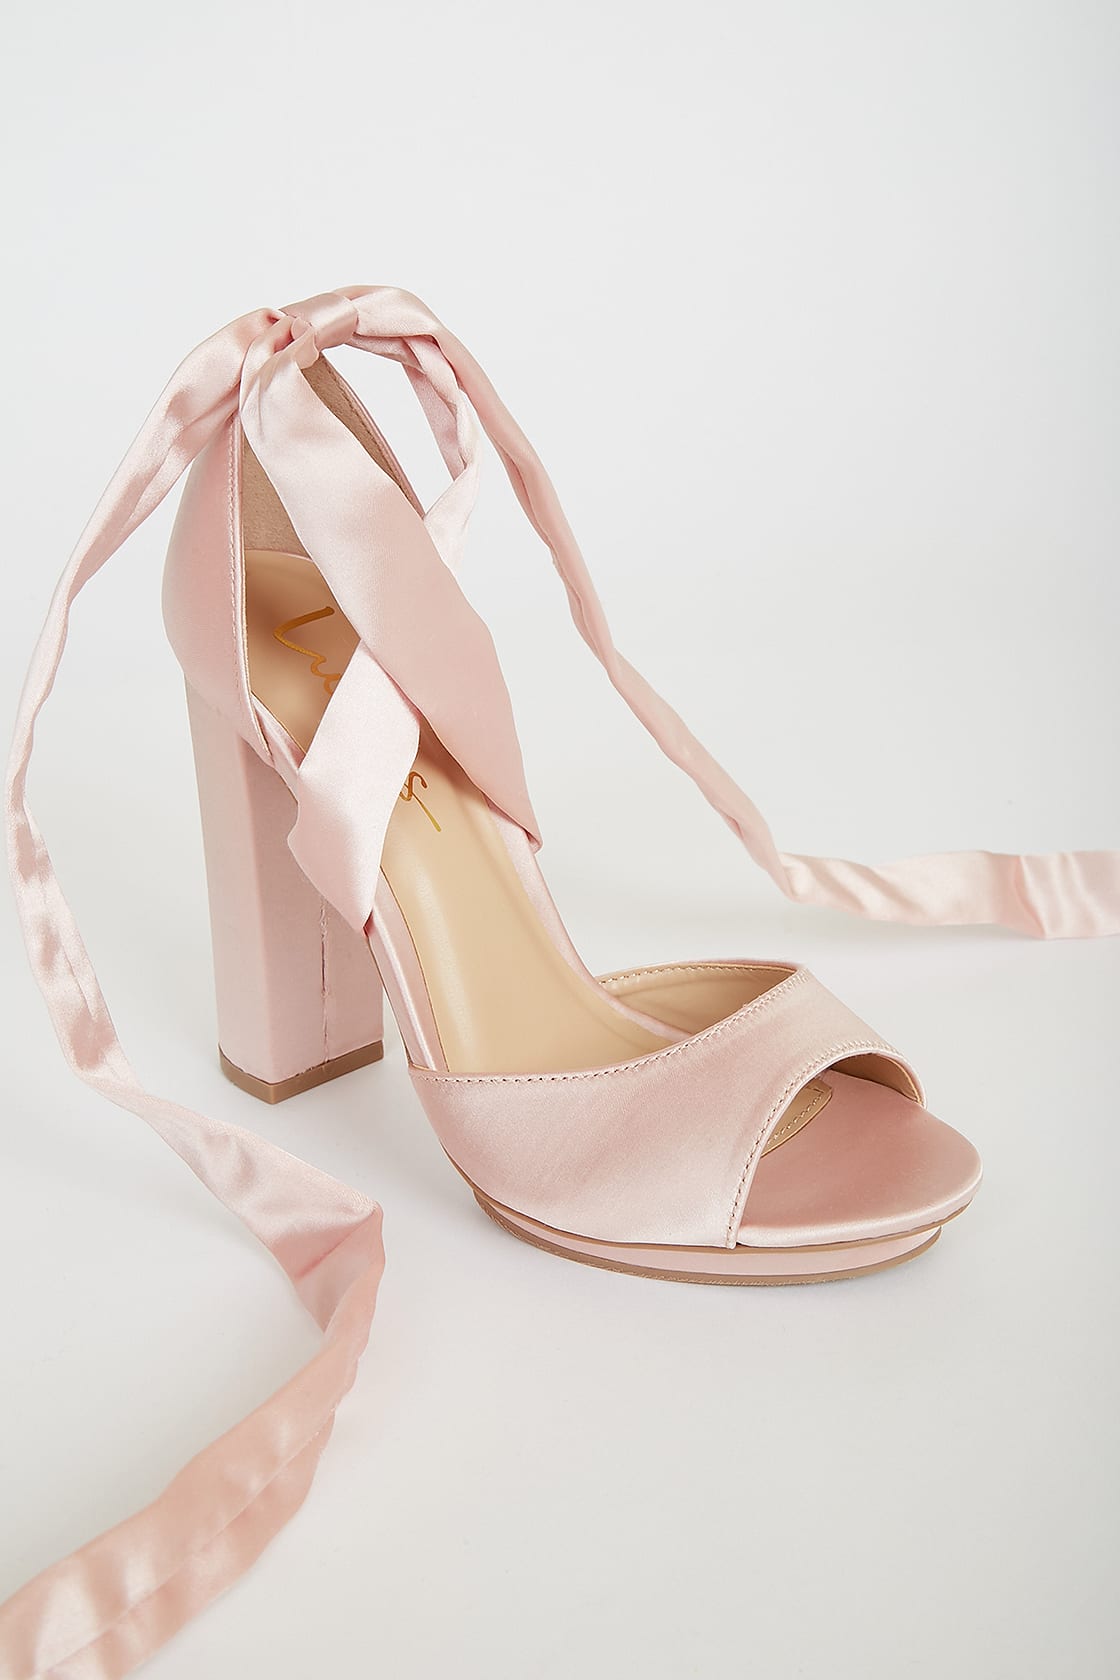 Blush pink lace-up heels